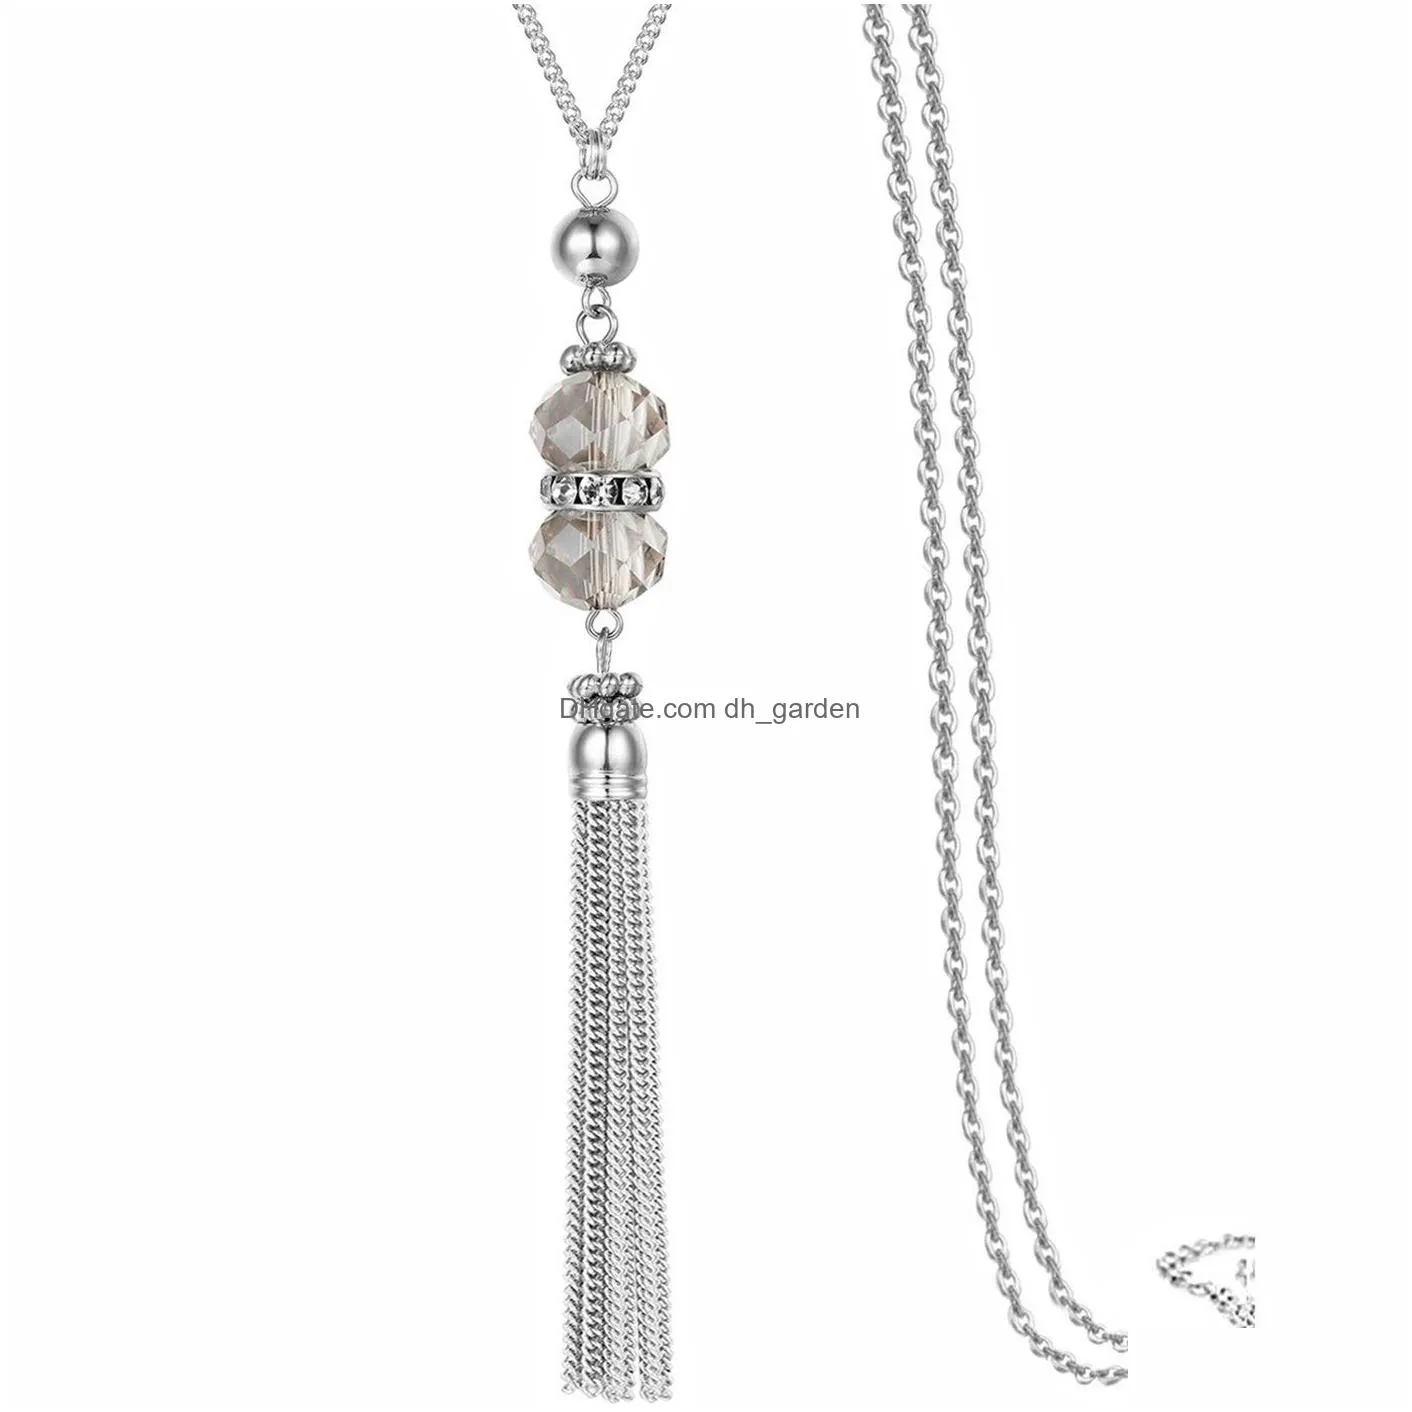 Korean Crystal Long Necklace Women Sweater Chain Fashion 2019 New Rhinestone Beads Alloy Tassel Bijoux Shiny Blue Party Jewelry Lady